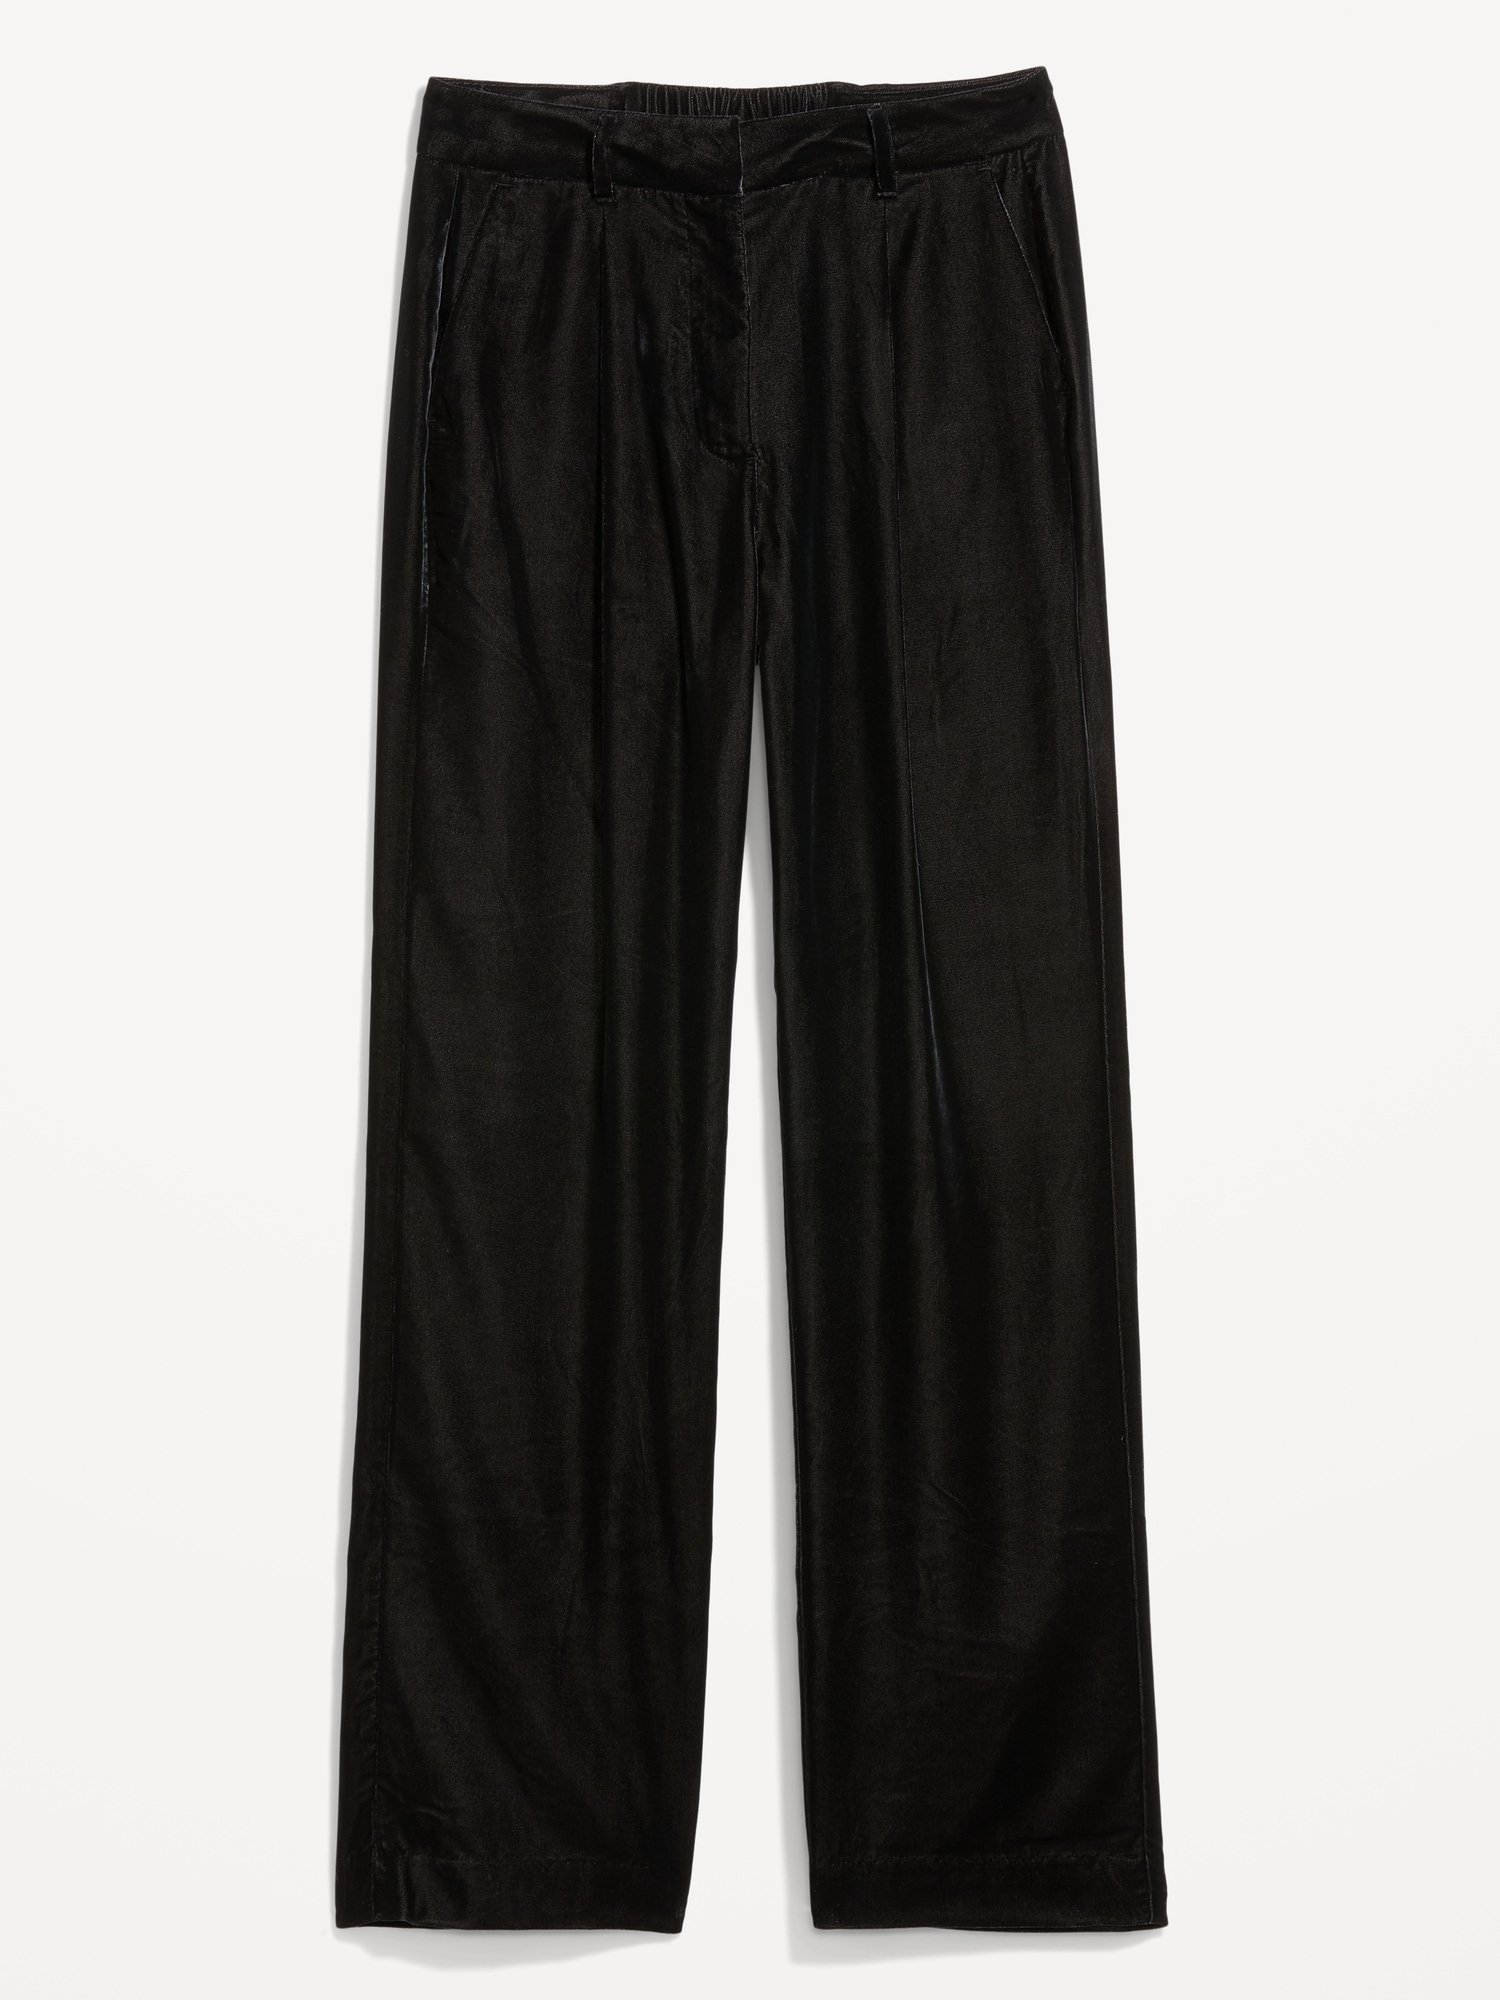 Regular Fit Cargo Pants - Black - Men | H&M US